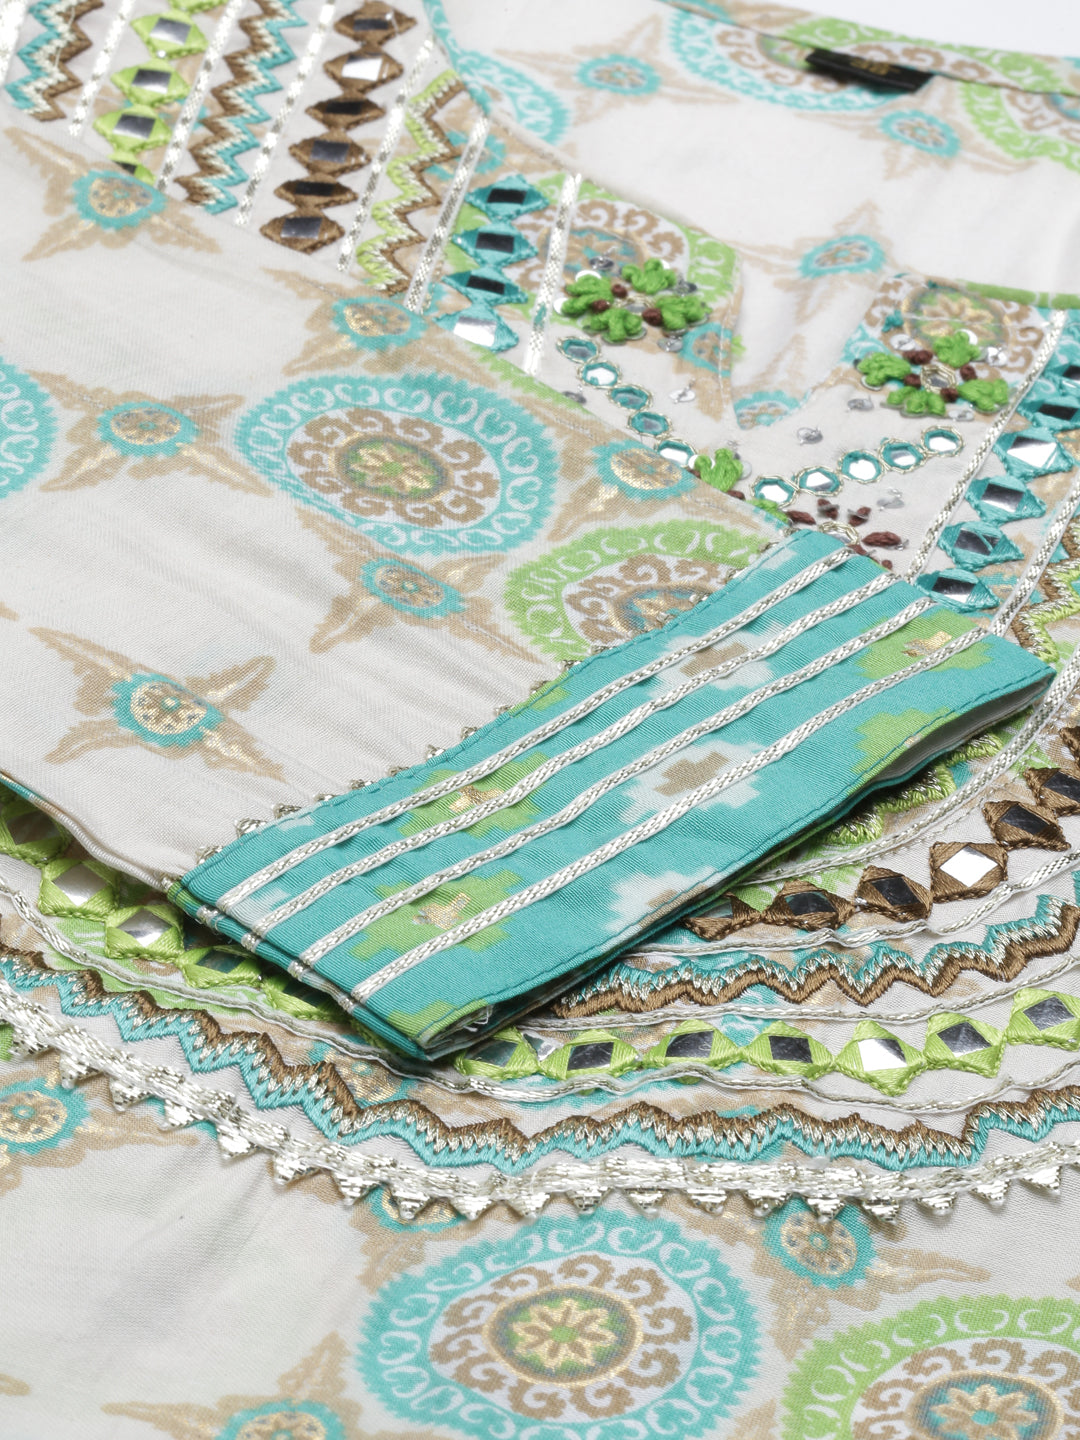 Neeru'S SEA GREEN color, Chanderi Cotton fabric Kurta Sets With Dupatta